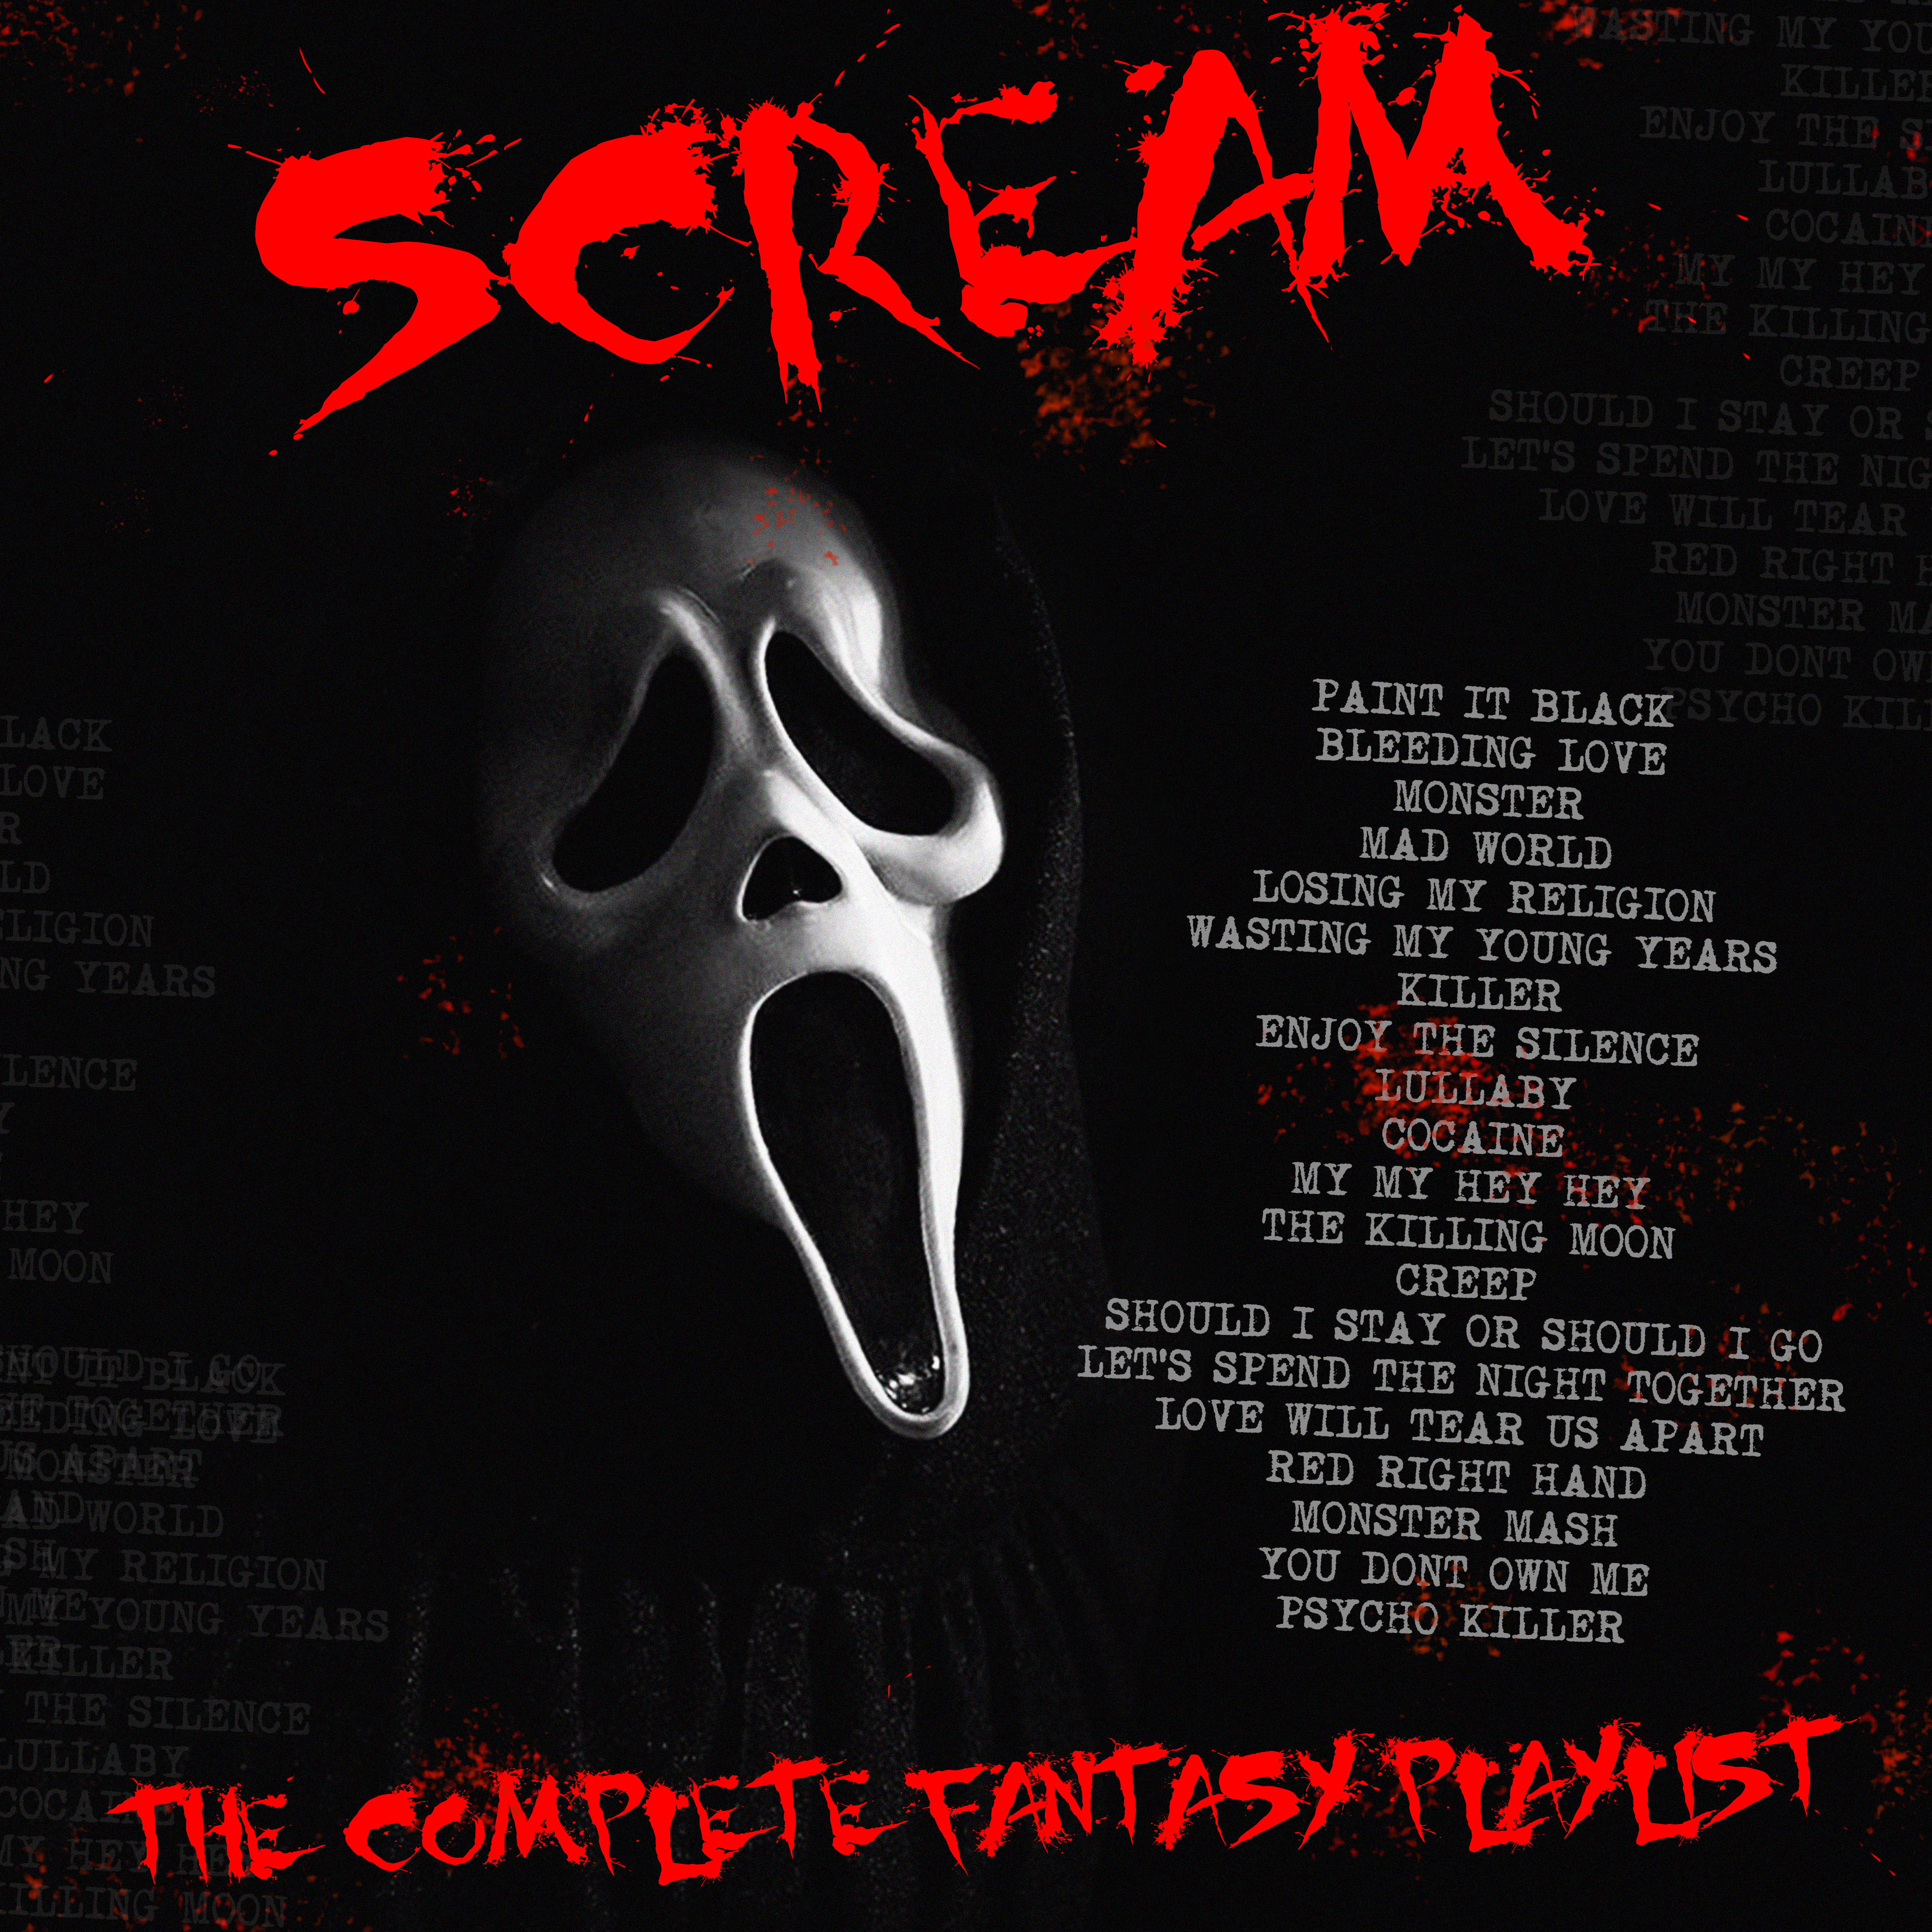 Scream - The Complete Fantasy Playlist